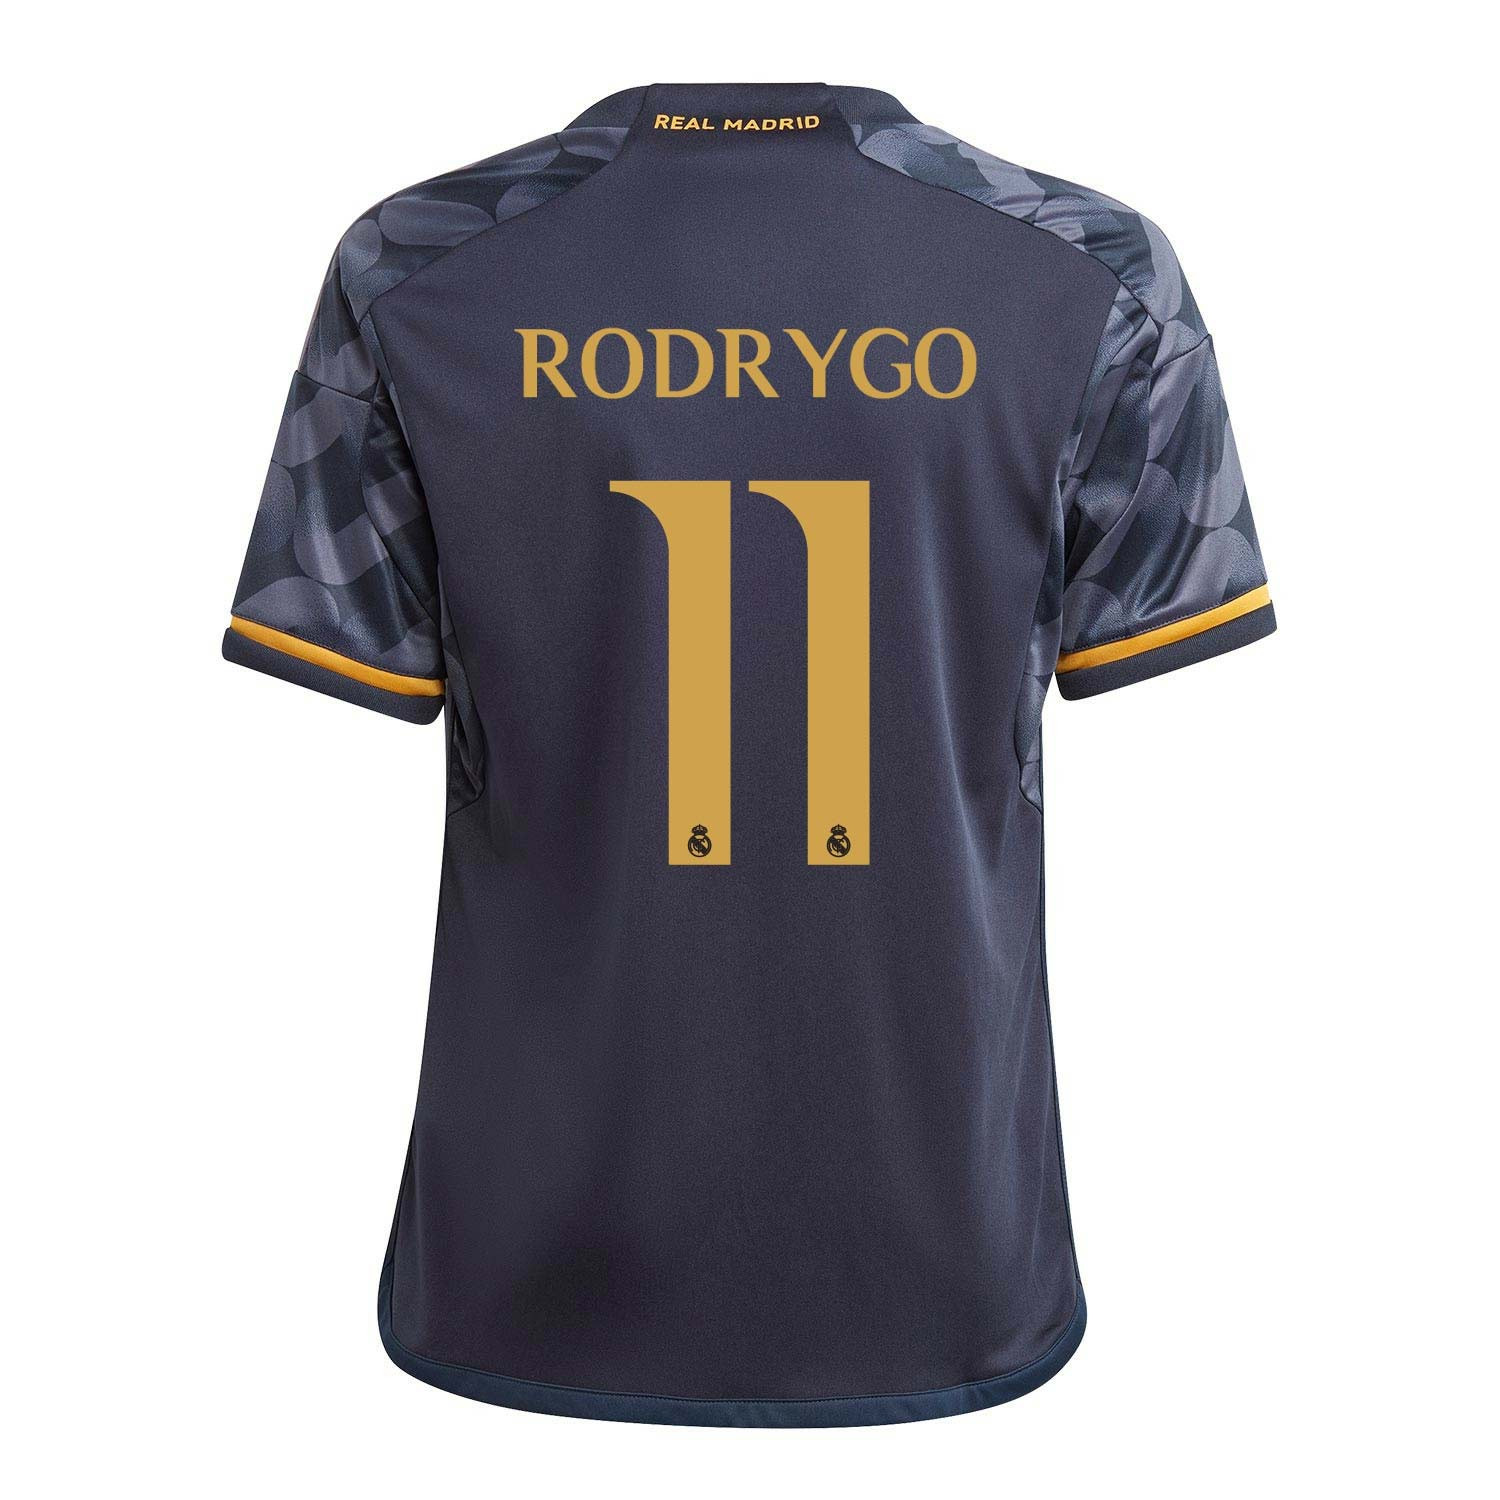 Camiseta adidas 2a Real Madrid Rodrygo niño 2023 2024 azul marino